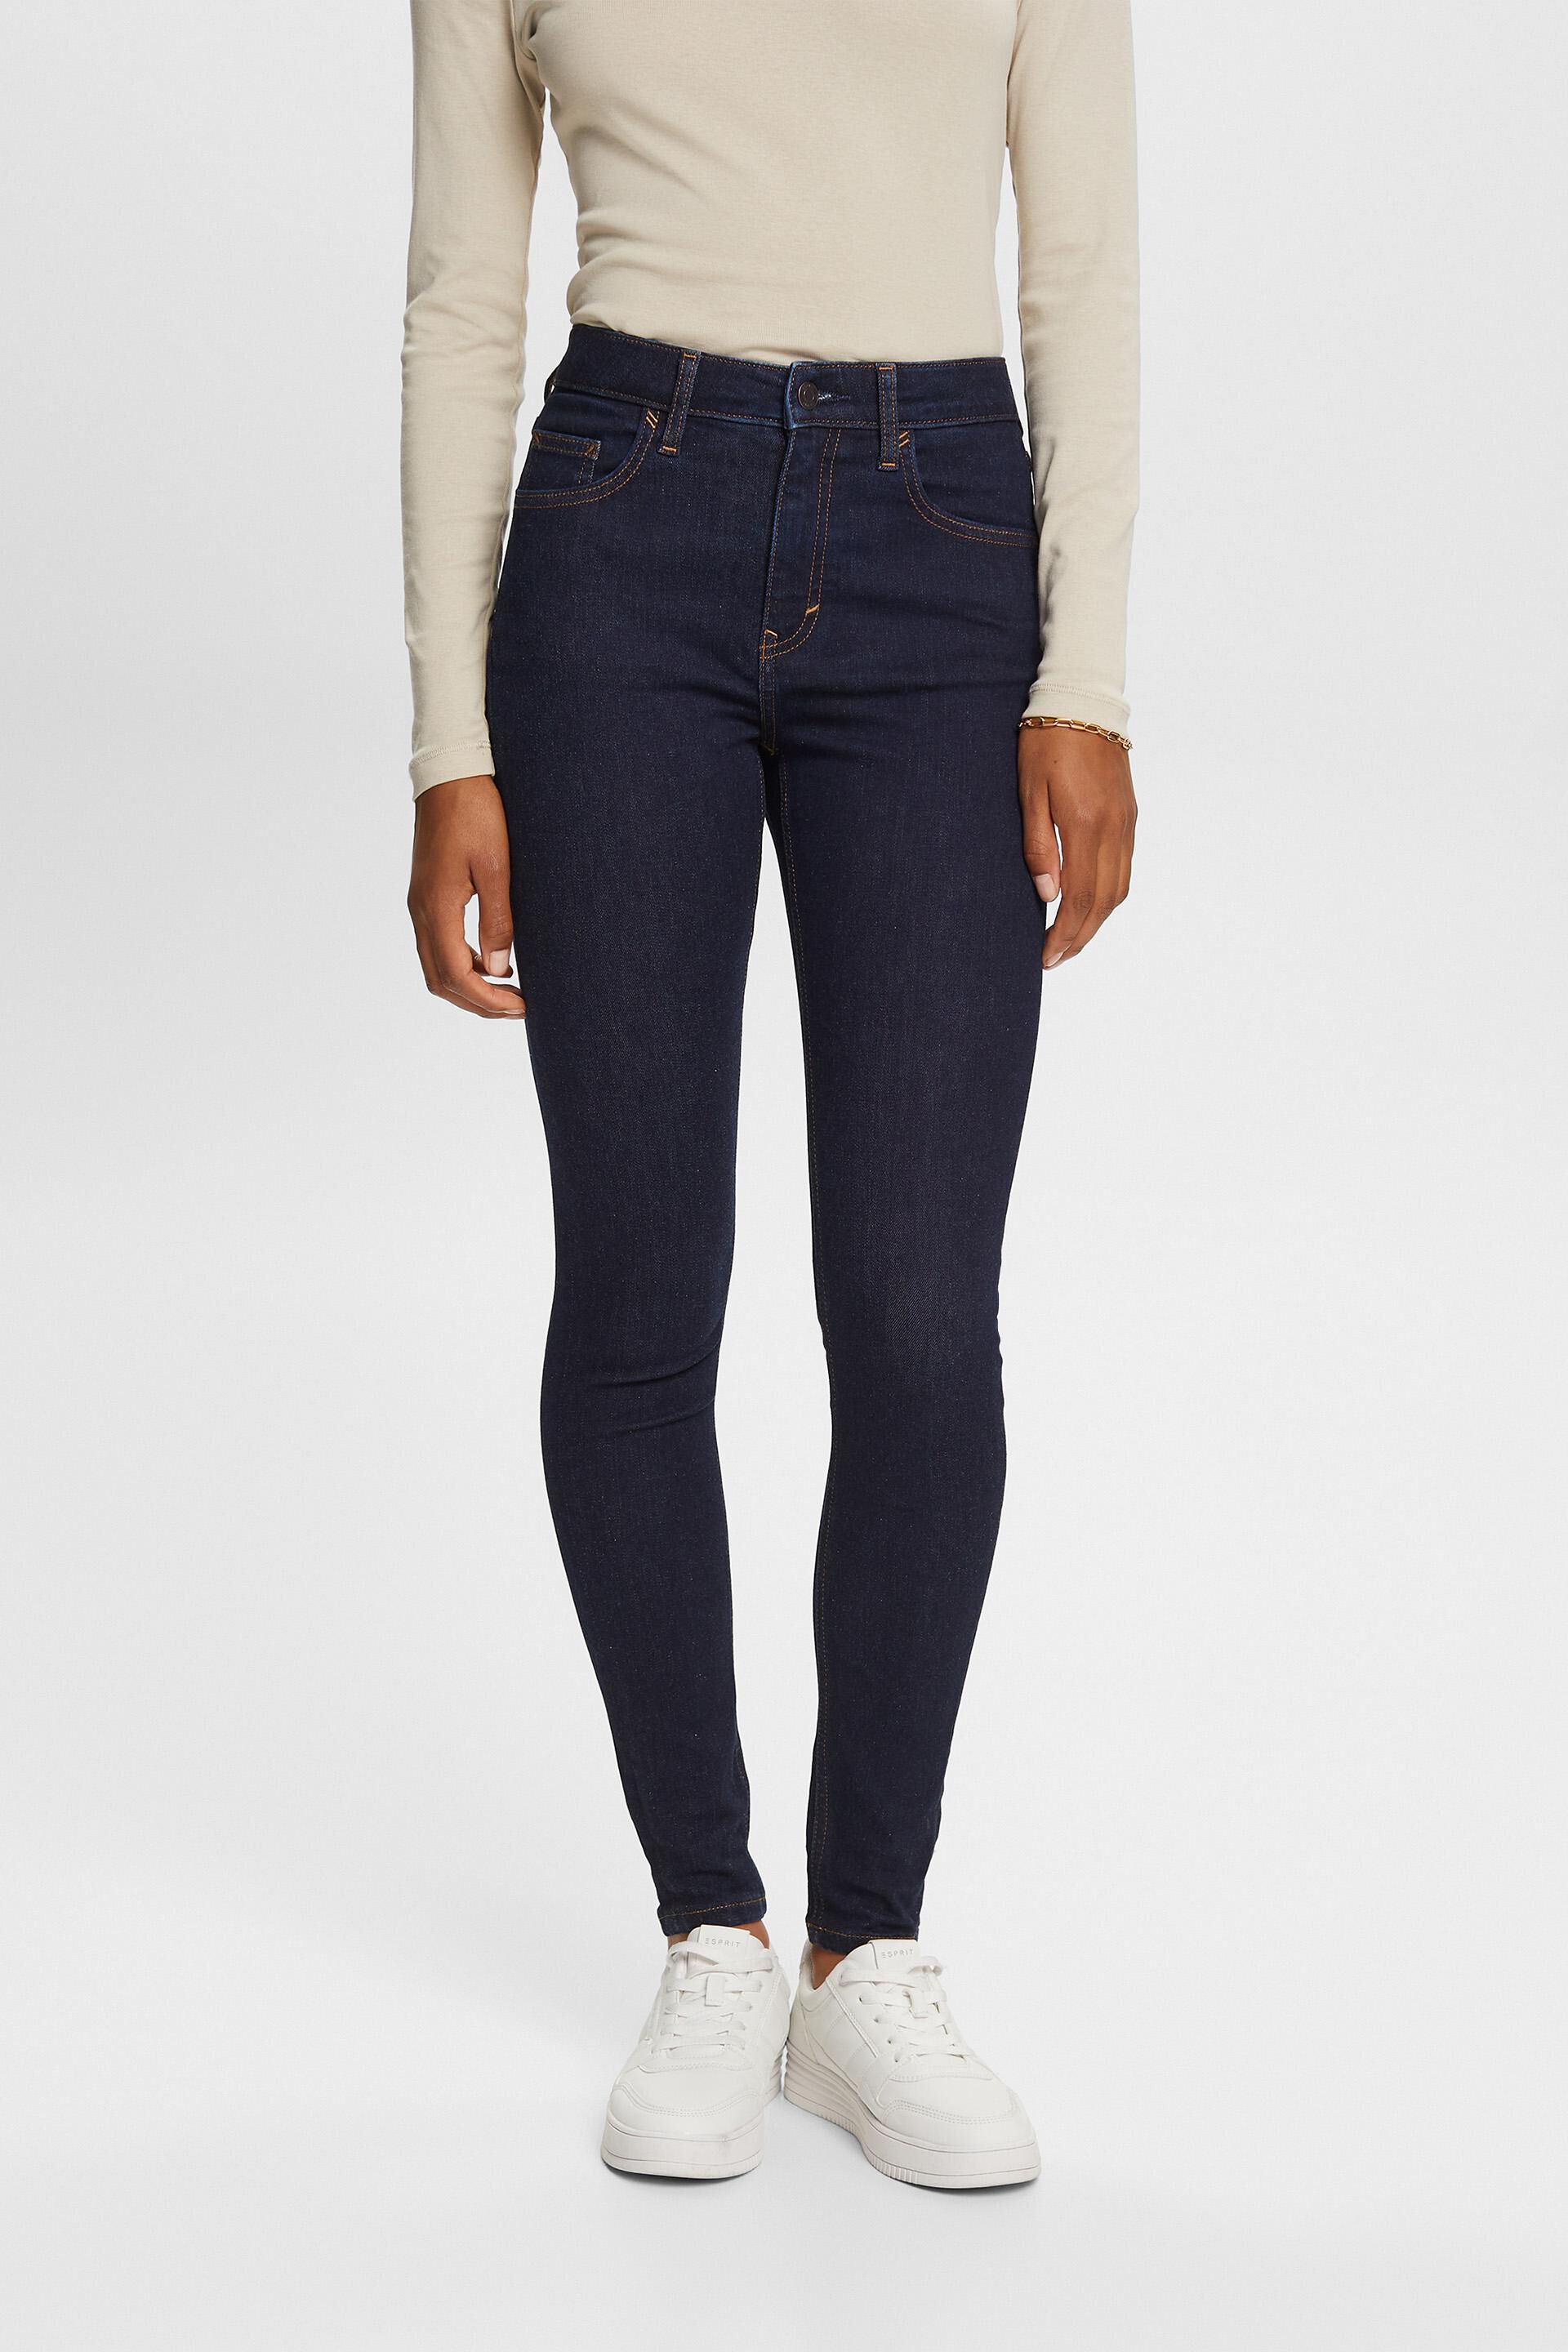 Esprit Damen Highrise skinny jeans, stretch cotton